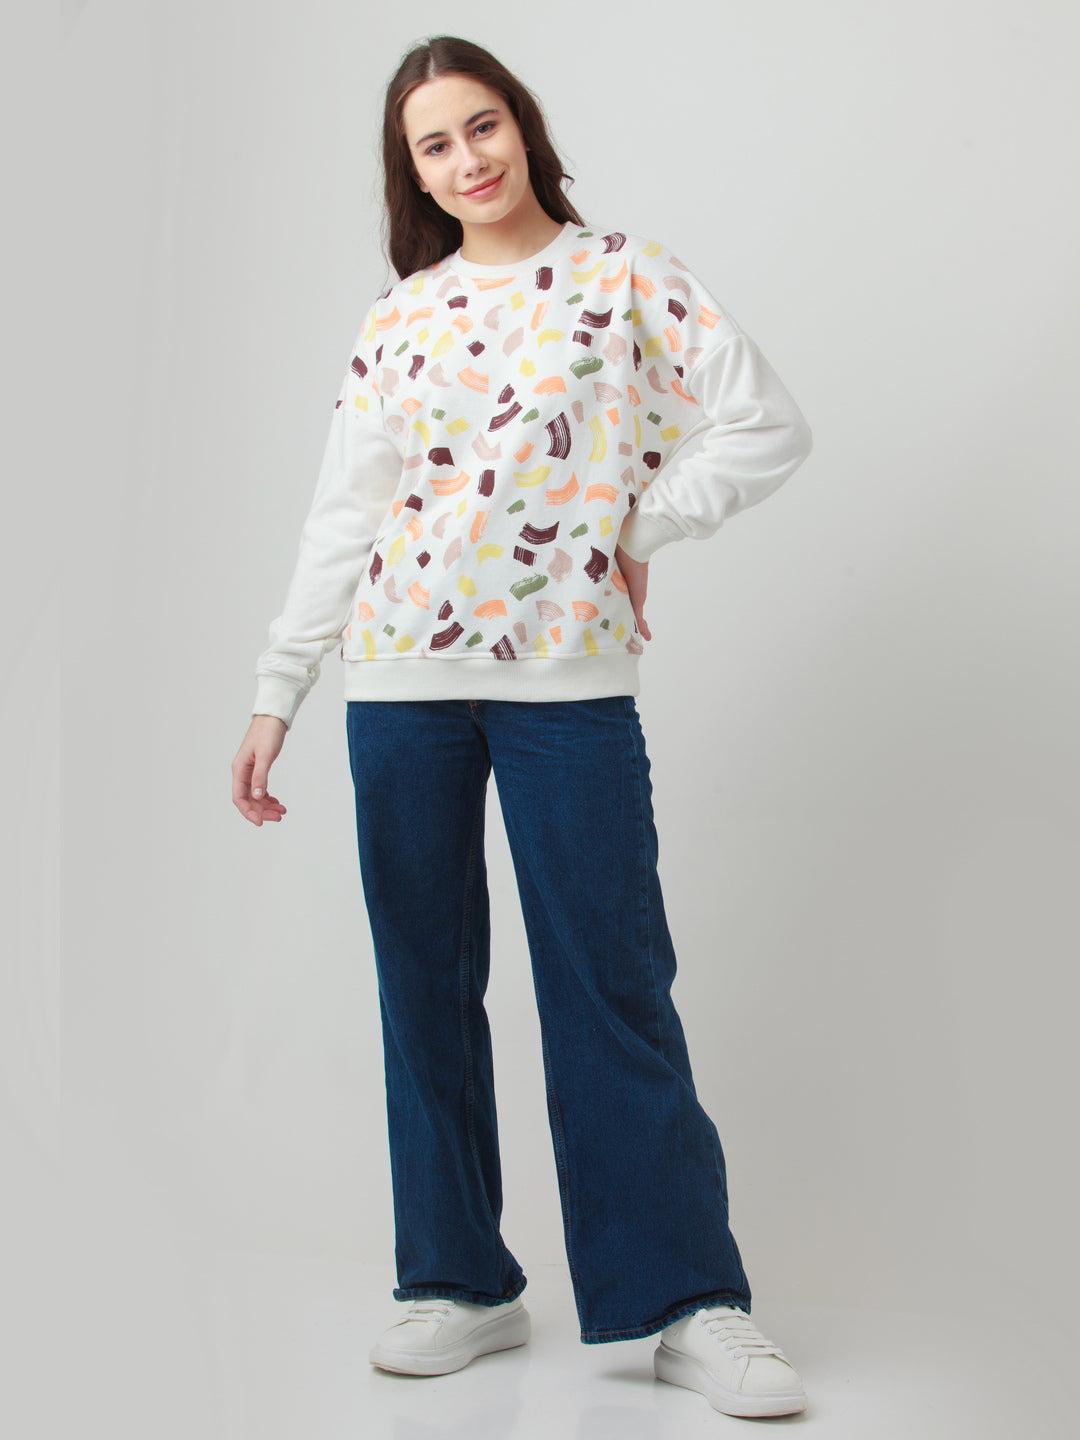 Multicolor Printed Sweatshirt For Women By Zink London 